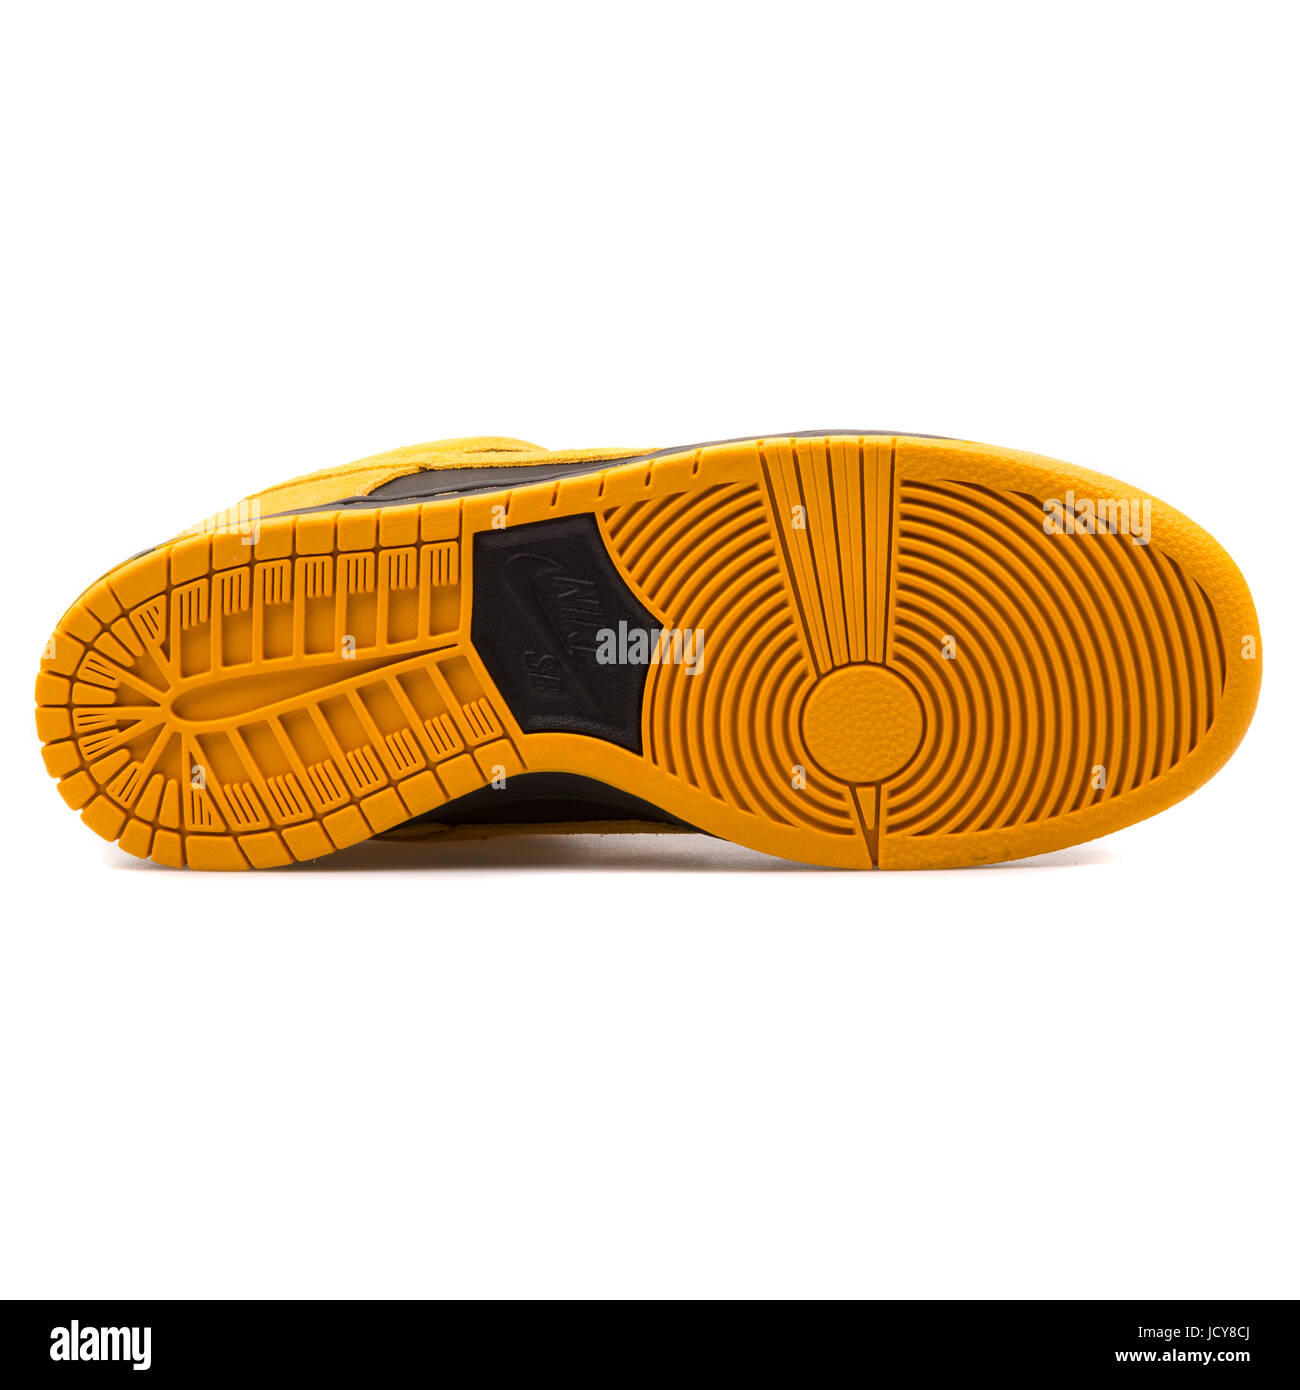 Nike Dunk Low Pro SB Gold Gelb und schwarz Herren Skateboarding Schuhe -  304292-706 Stockfotografie - Alamy